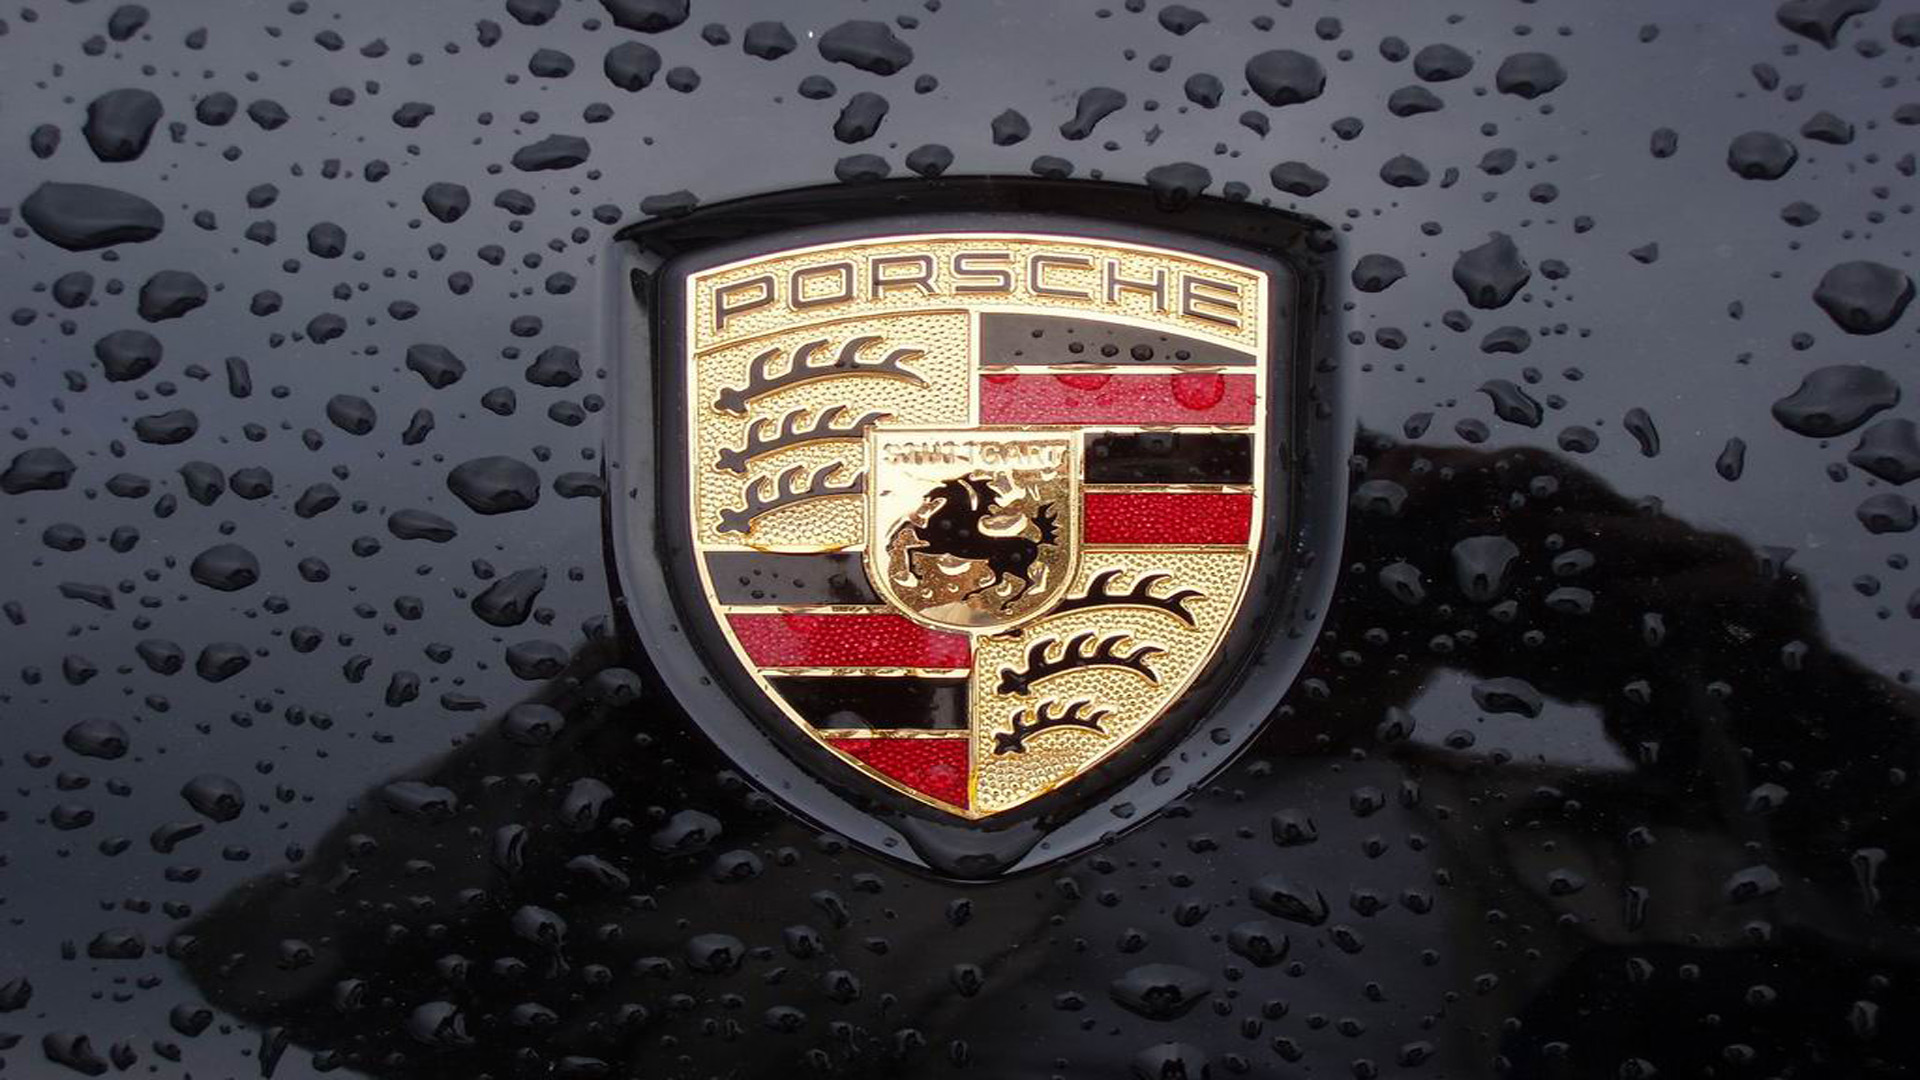 Porsche Logo Wallpapers Pictures Images